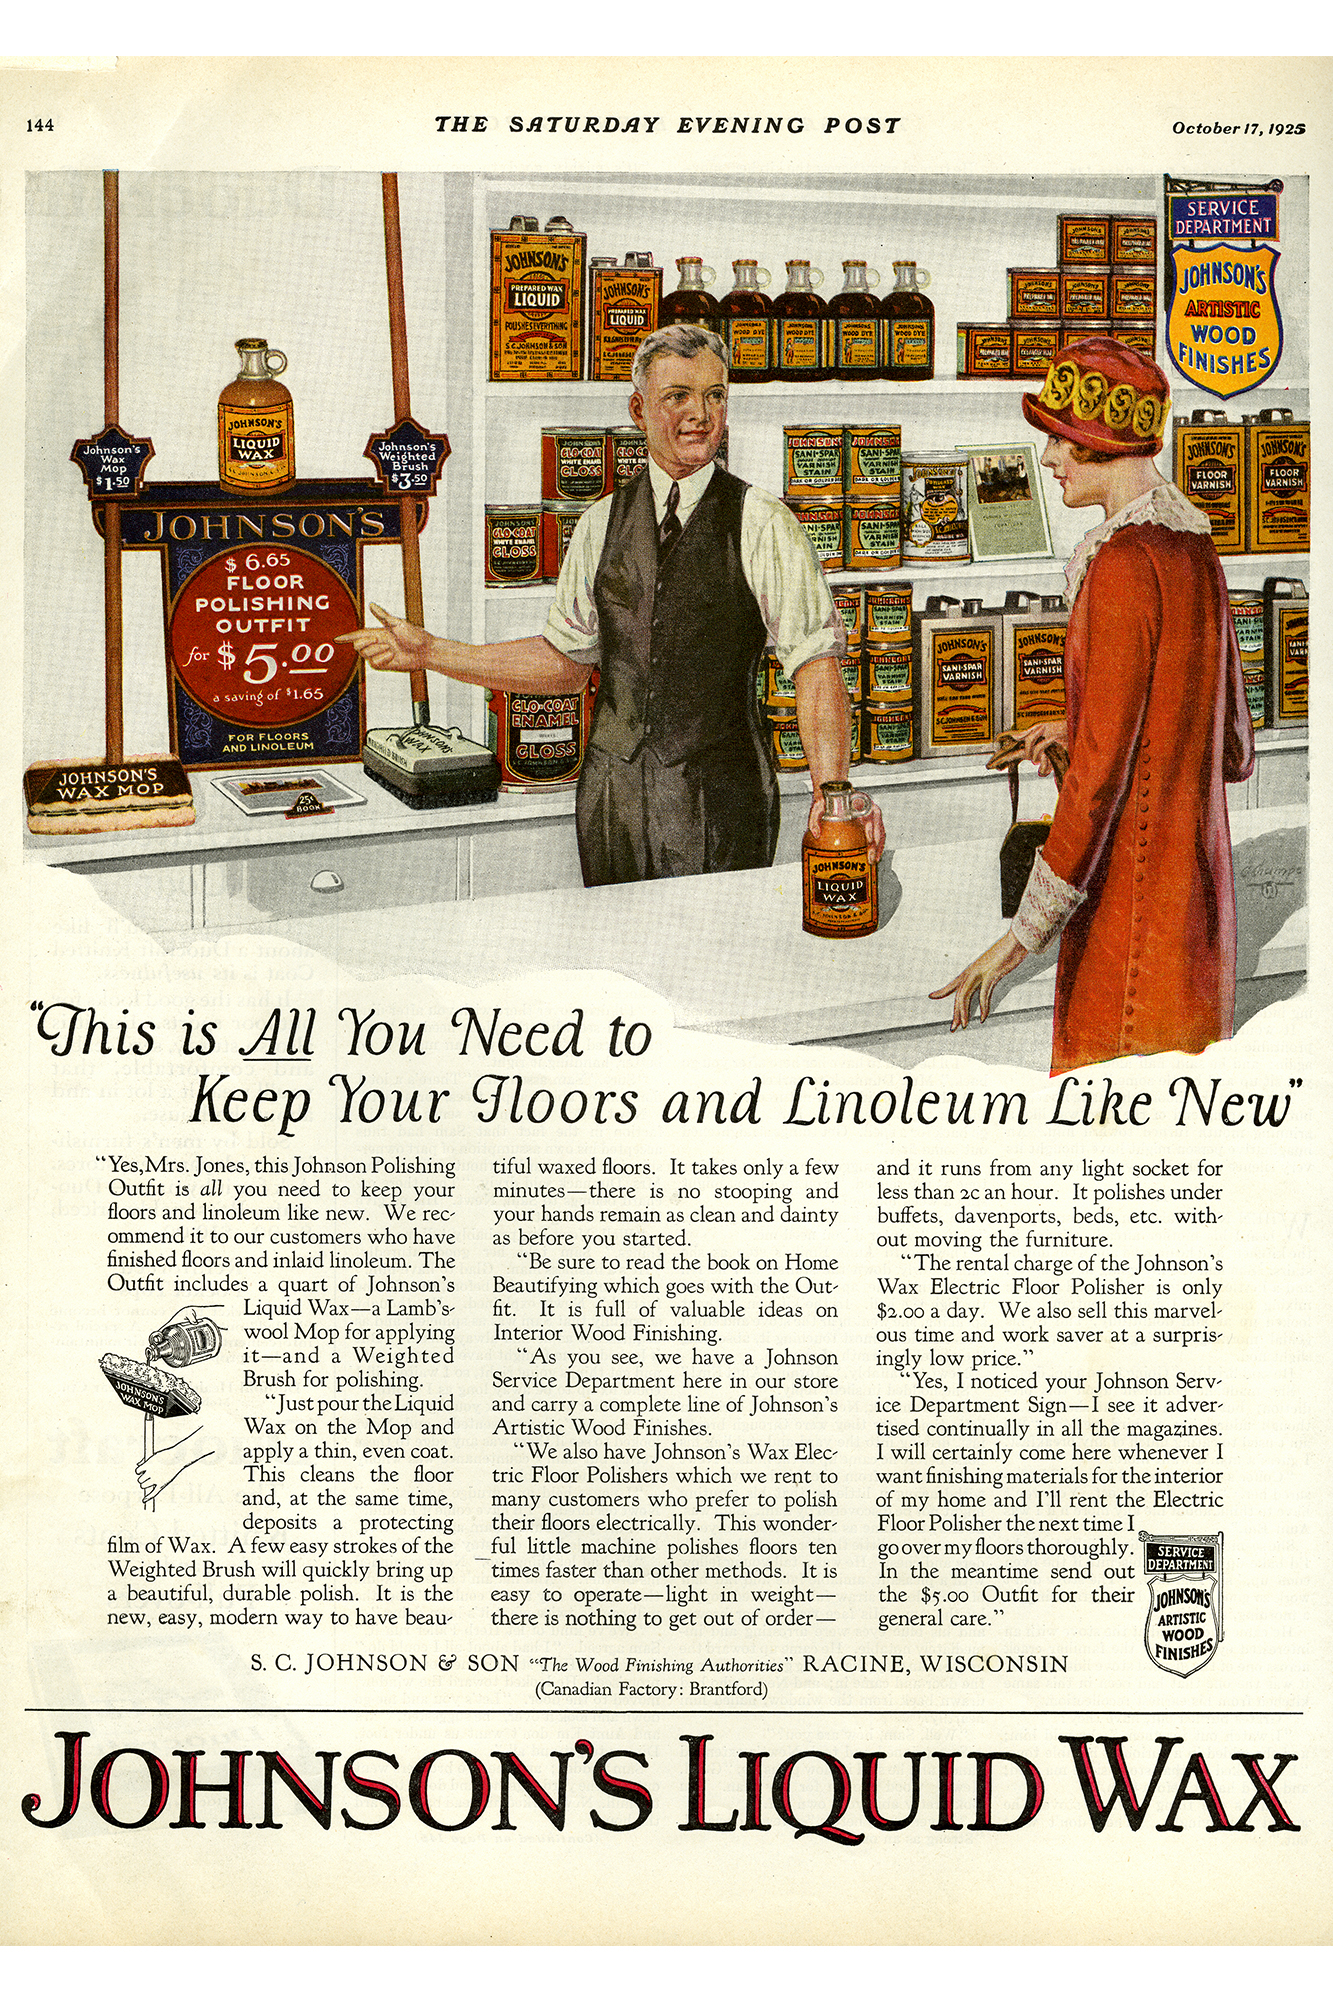 Johnson Wax’s Liquid Polish vintage advertisement from 1925